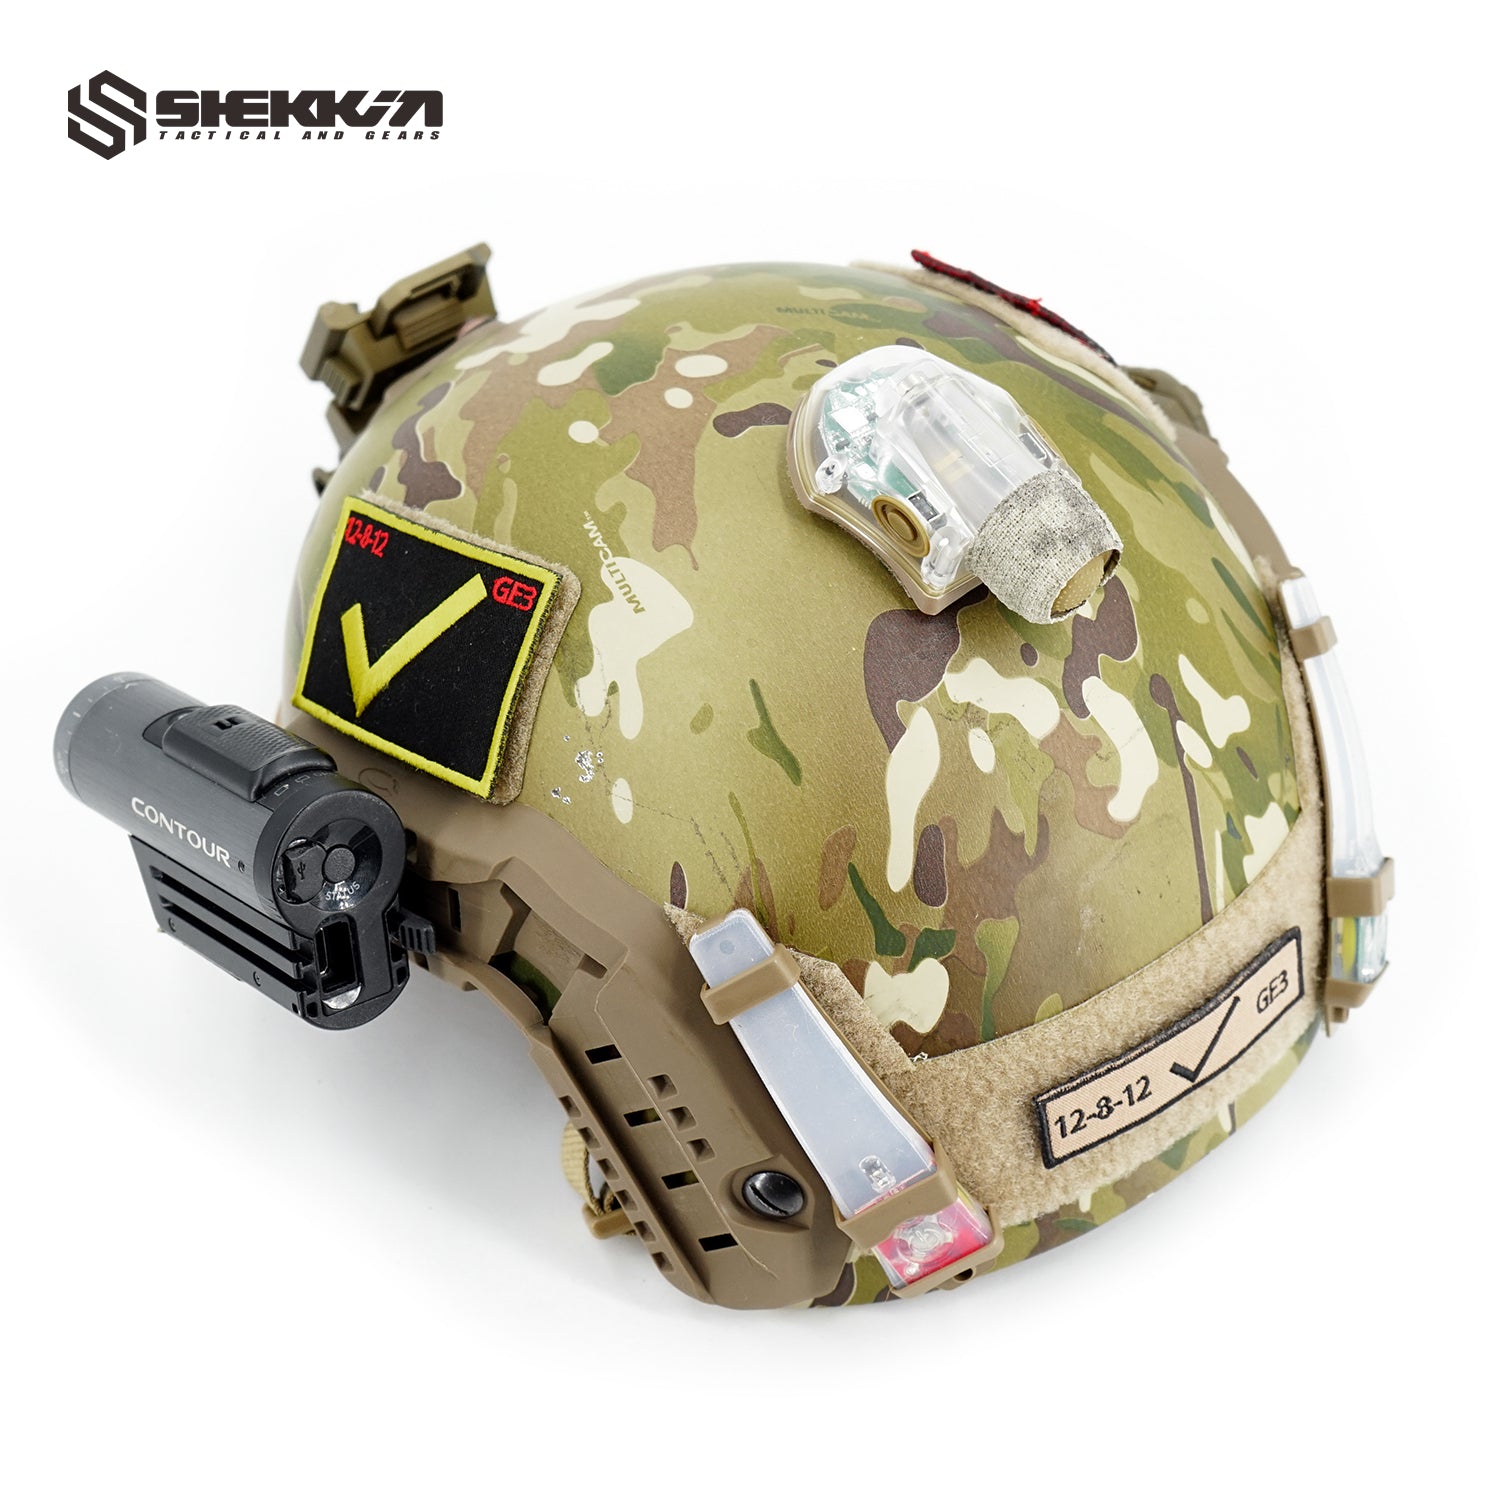 Shekkin Gears helmet sticker set for OPS core Maritime